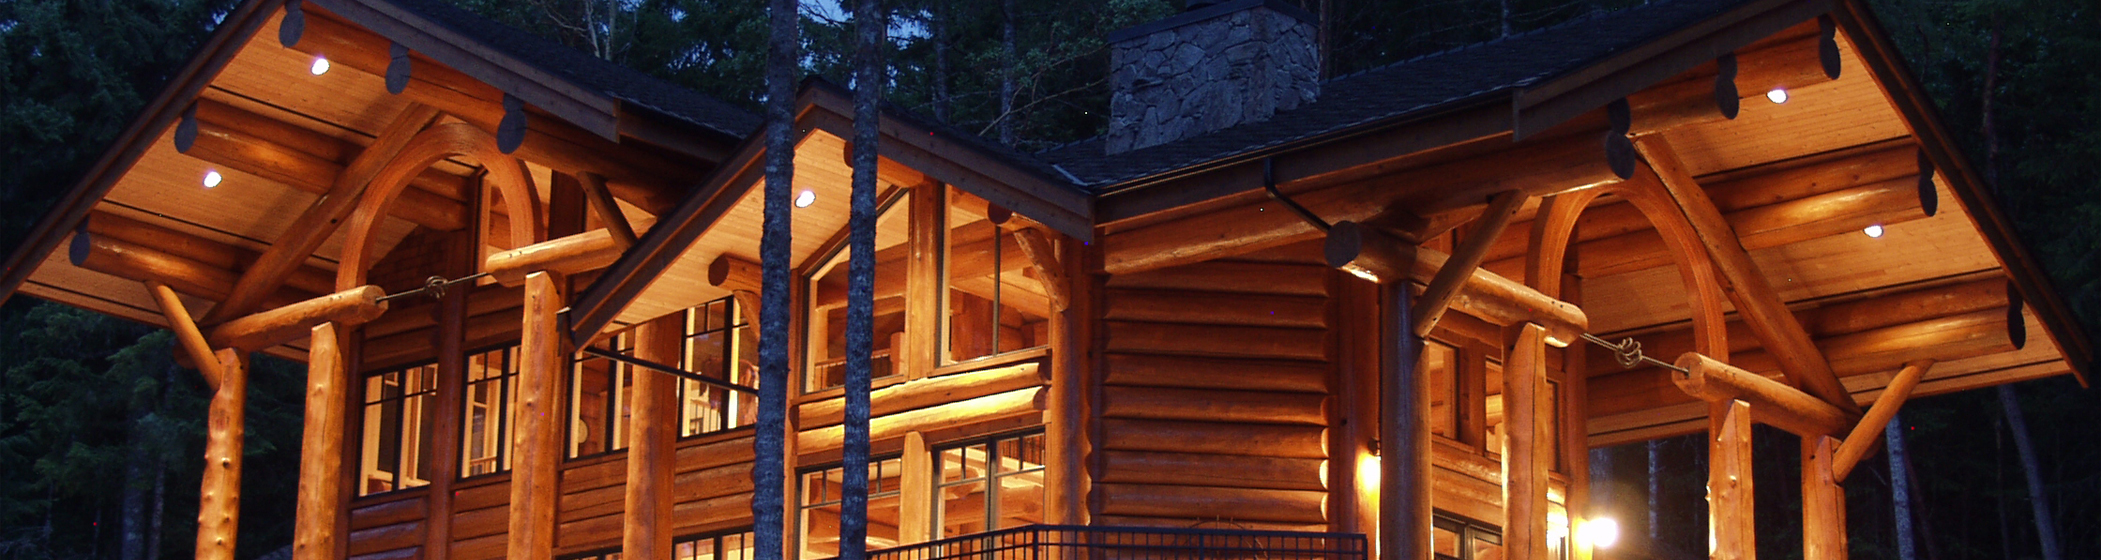 Custom designed luxury log home by Log and Timber Works Saskatchewan